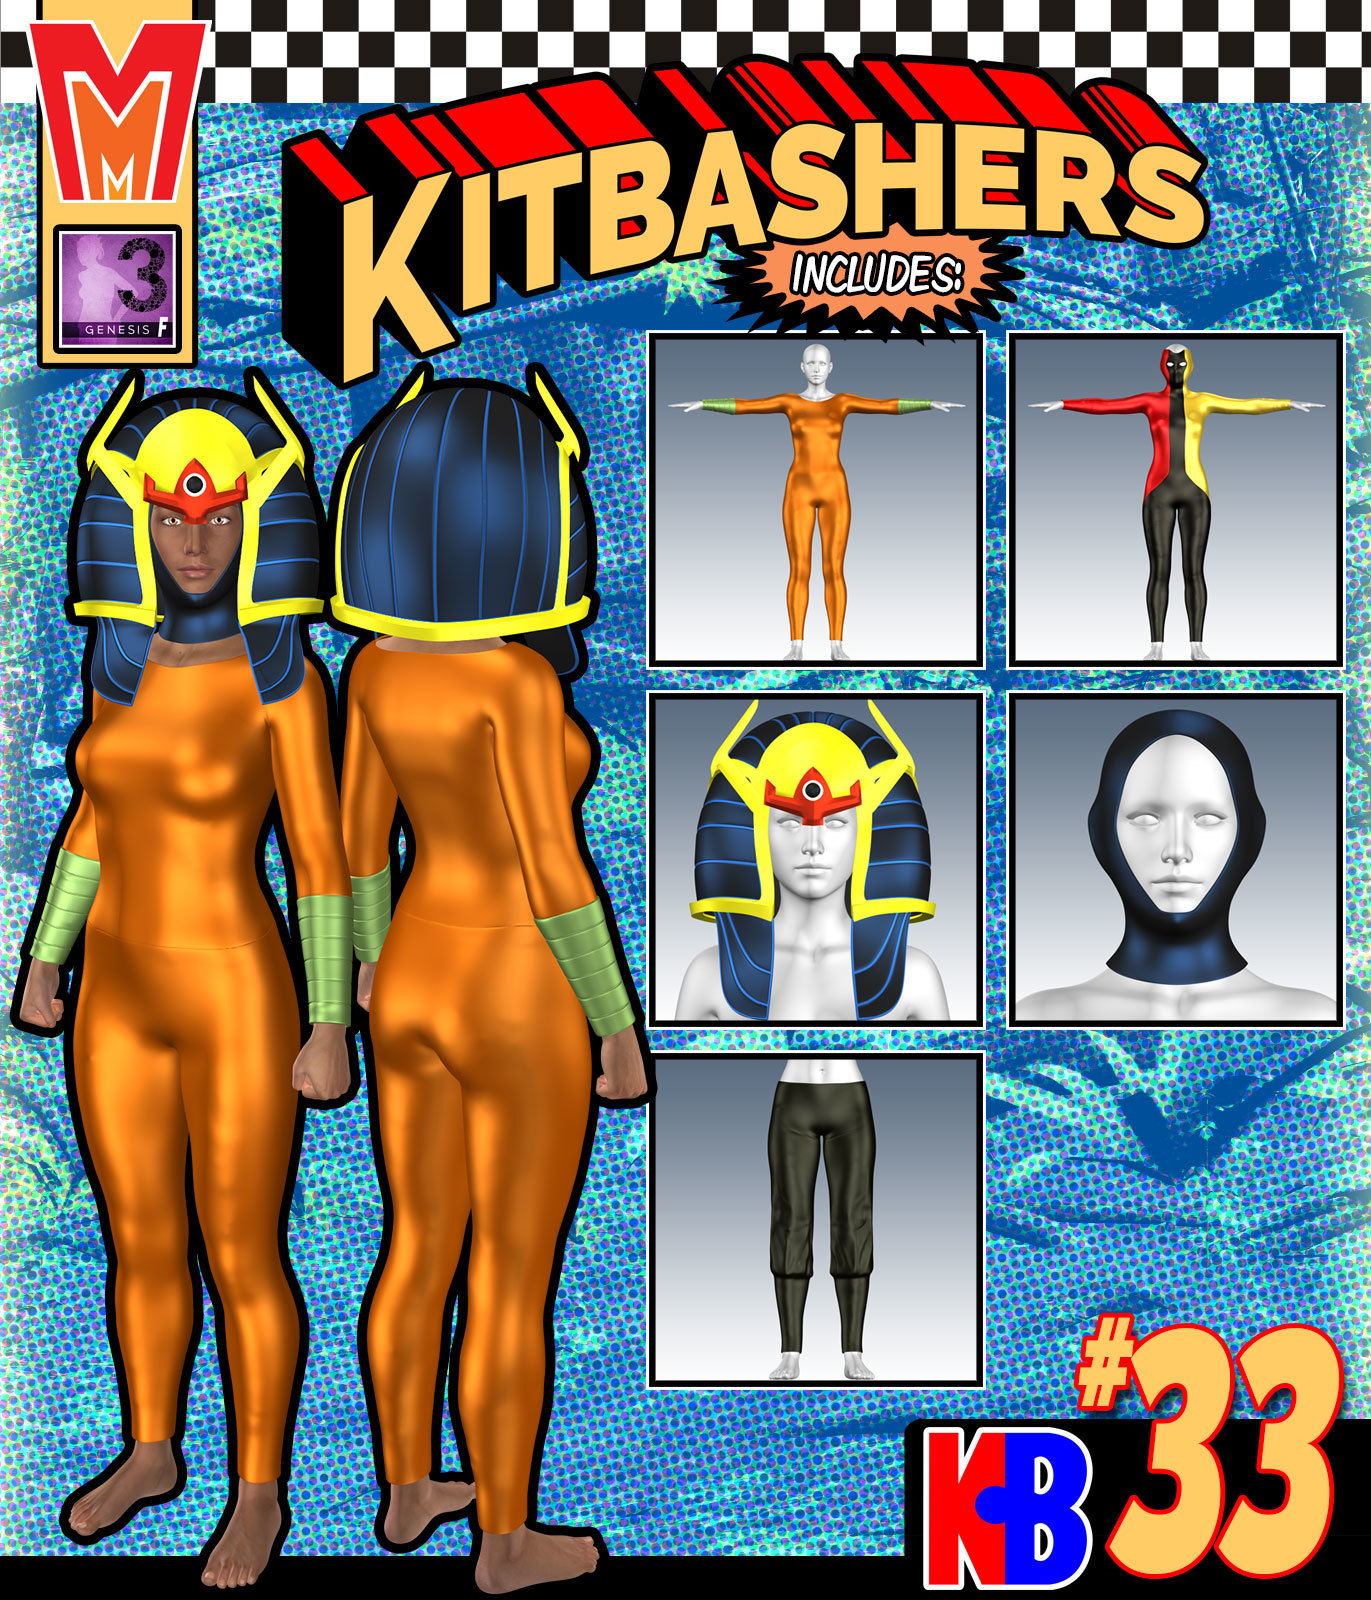 Kitbashers 033 MMG3F by: MightyMite, 3D Models by Daz 3D